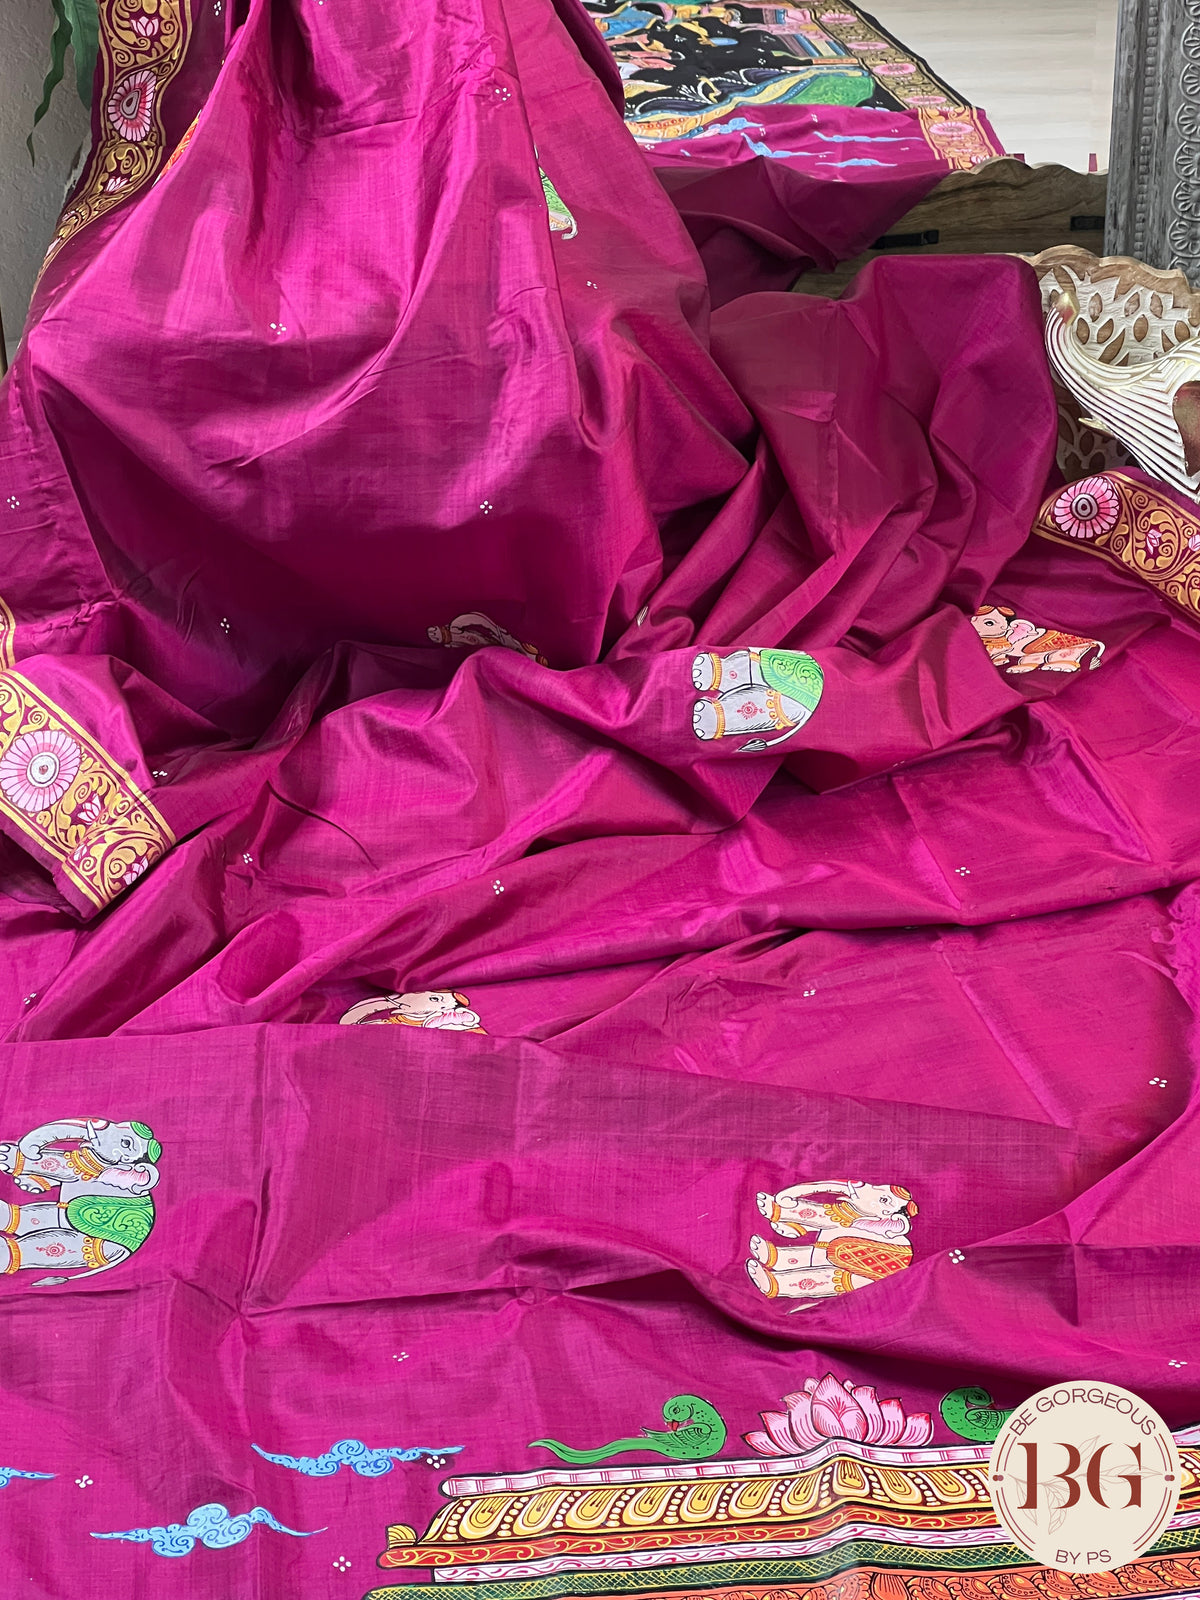 Pattachitra hand painted mulberry silk saree with ganesha - pink/purple